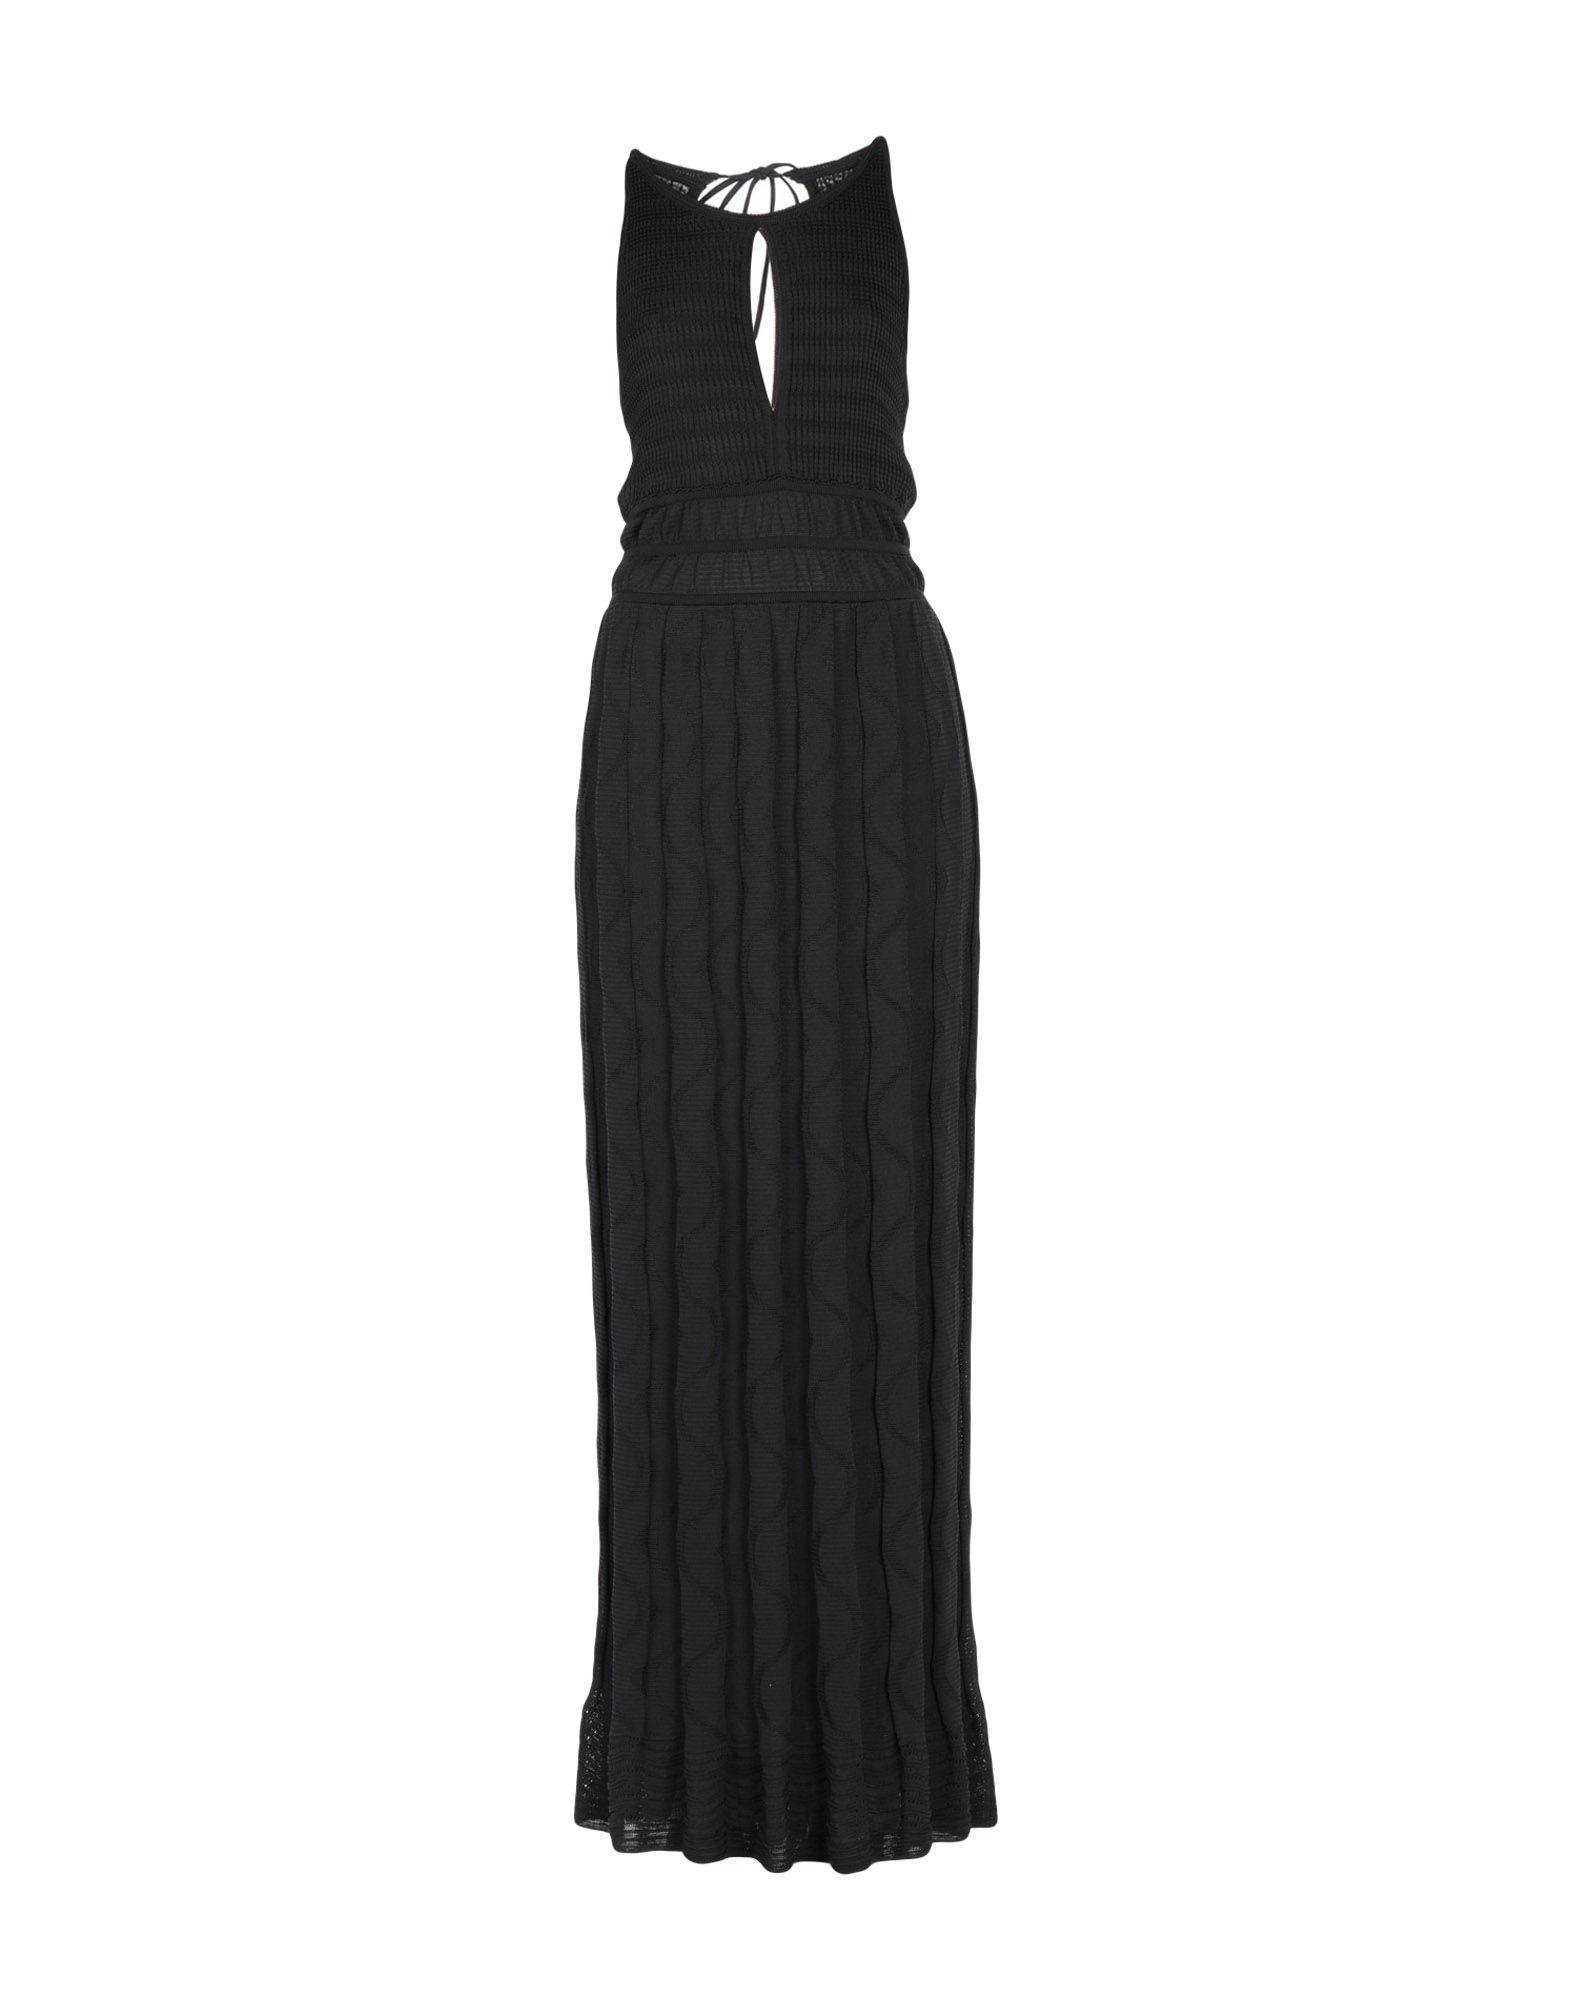 M Missoni Cotton Long Dress in Black - Lyst